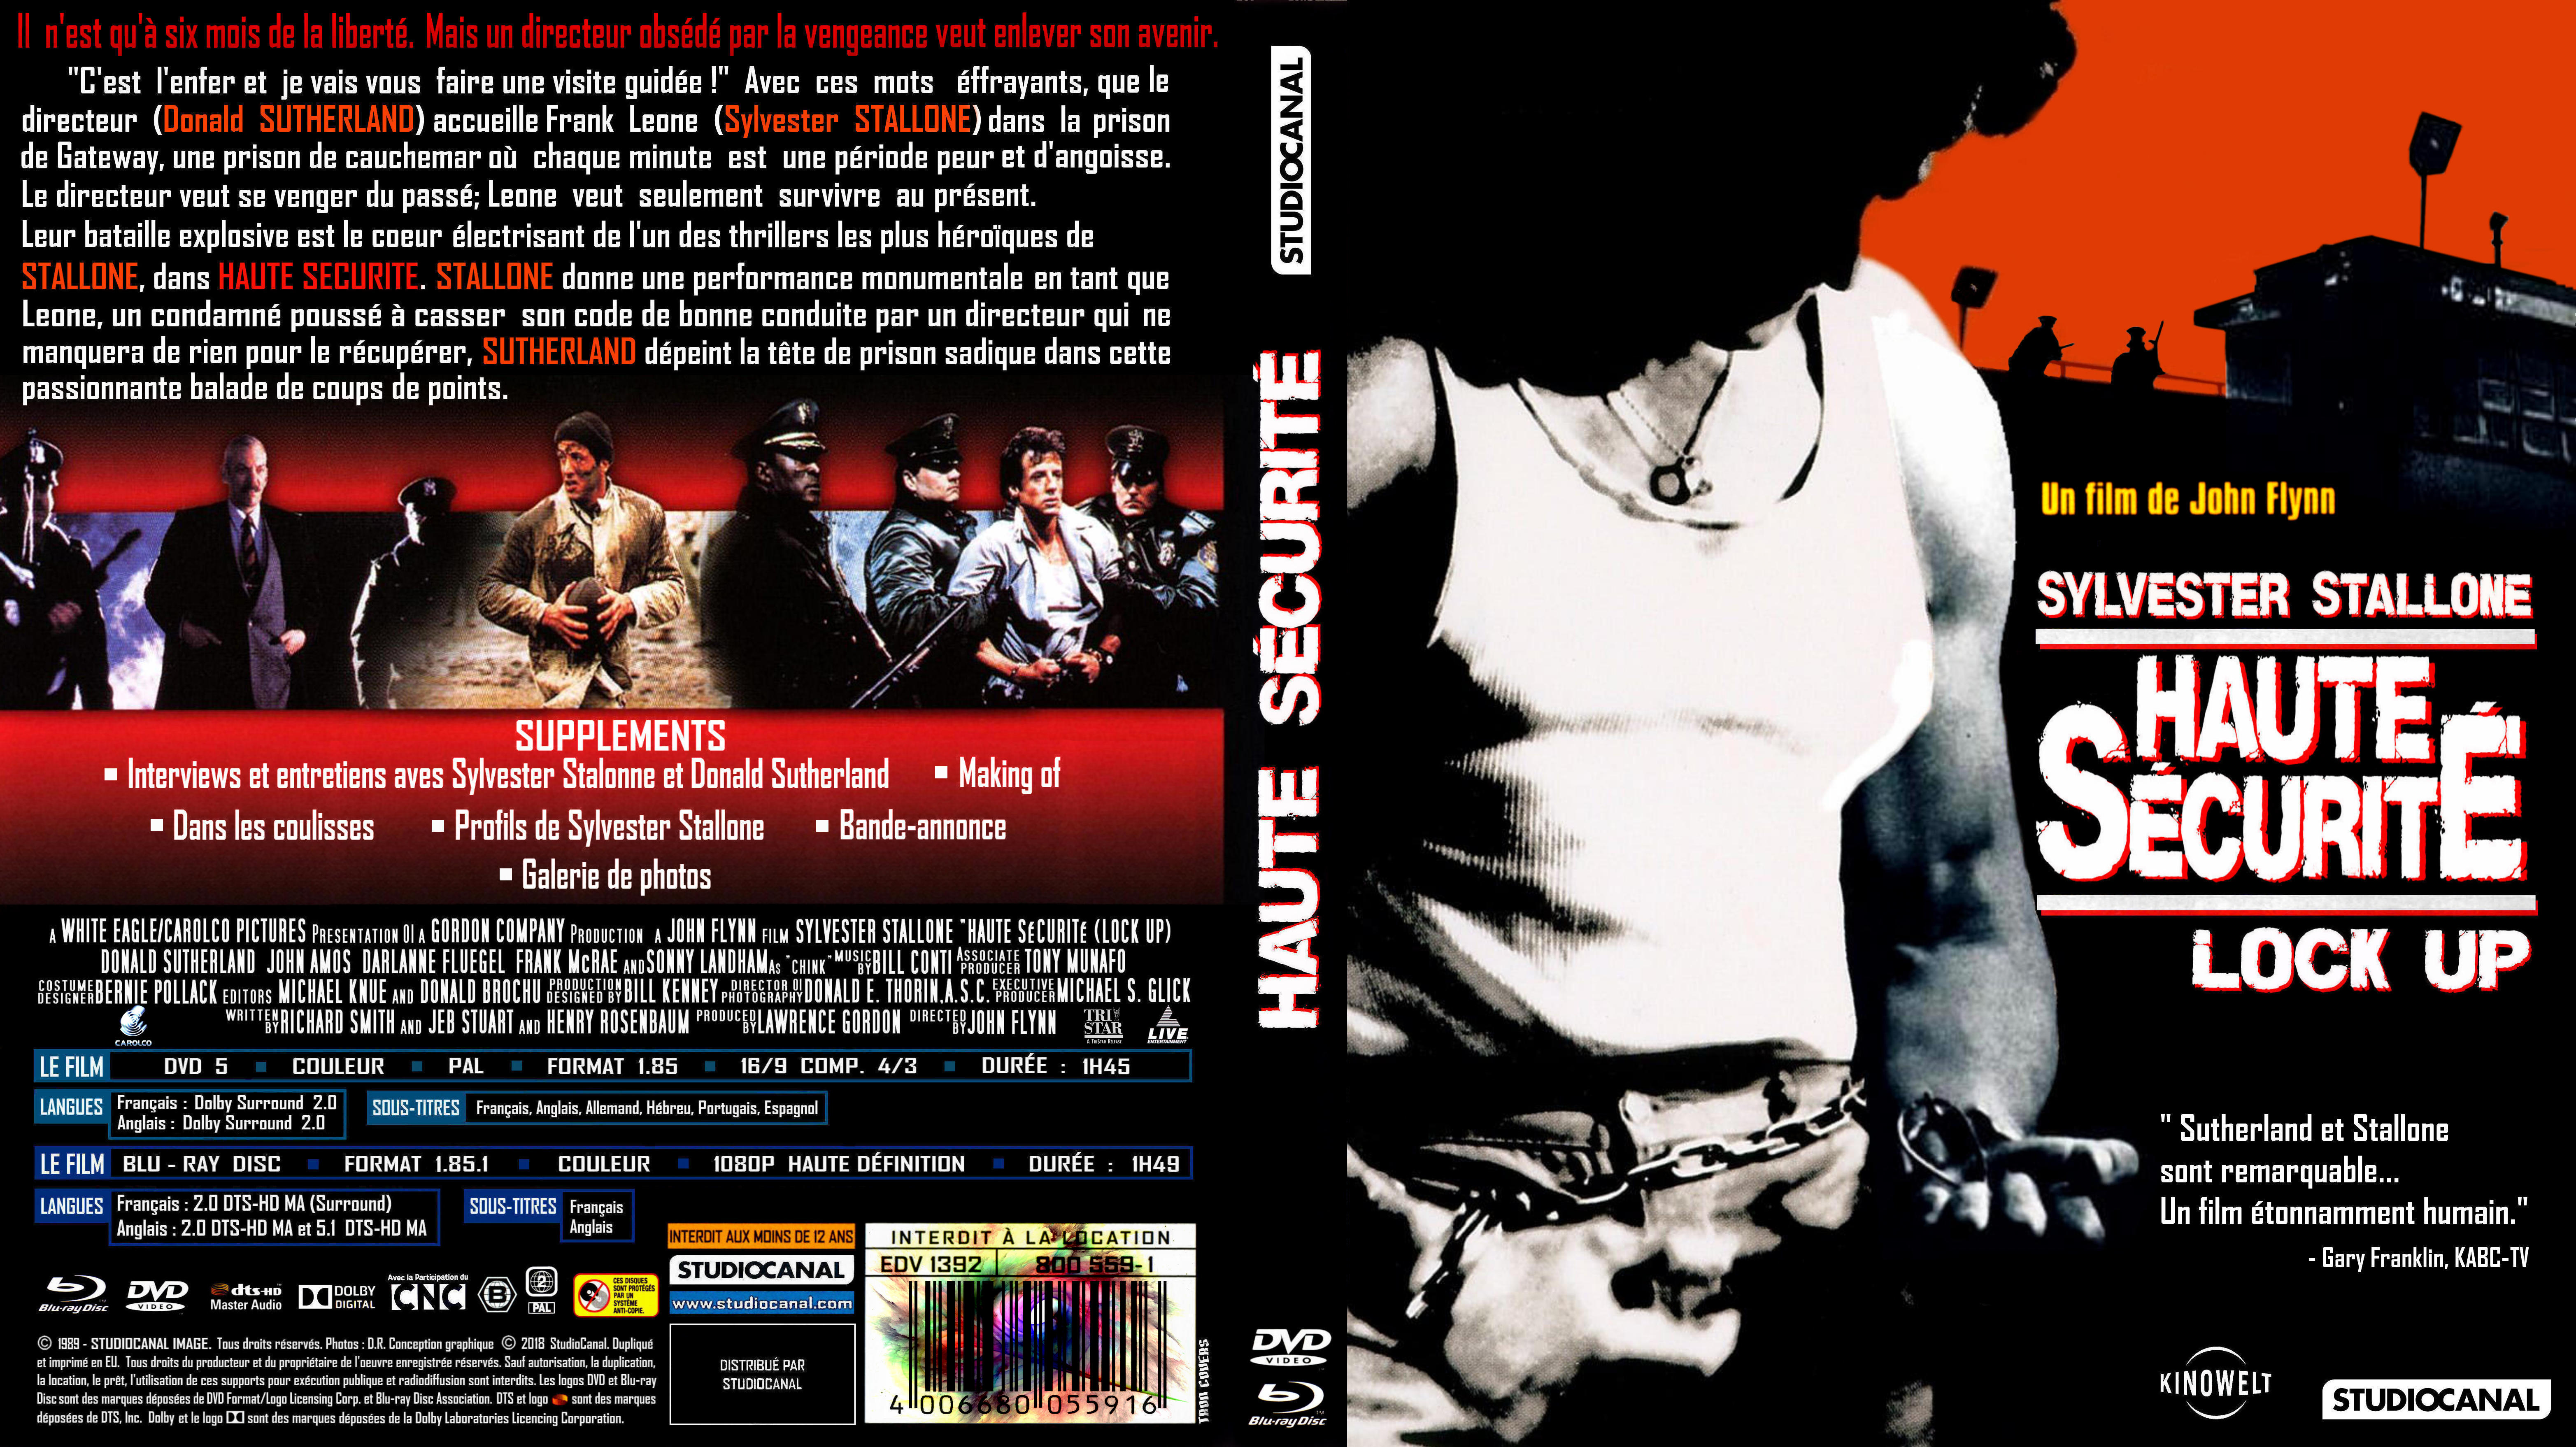 Jaquette DVD Haute securite custom (BLU-RAY) 